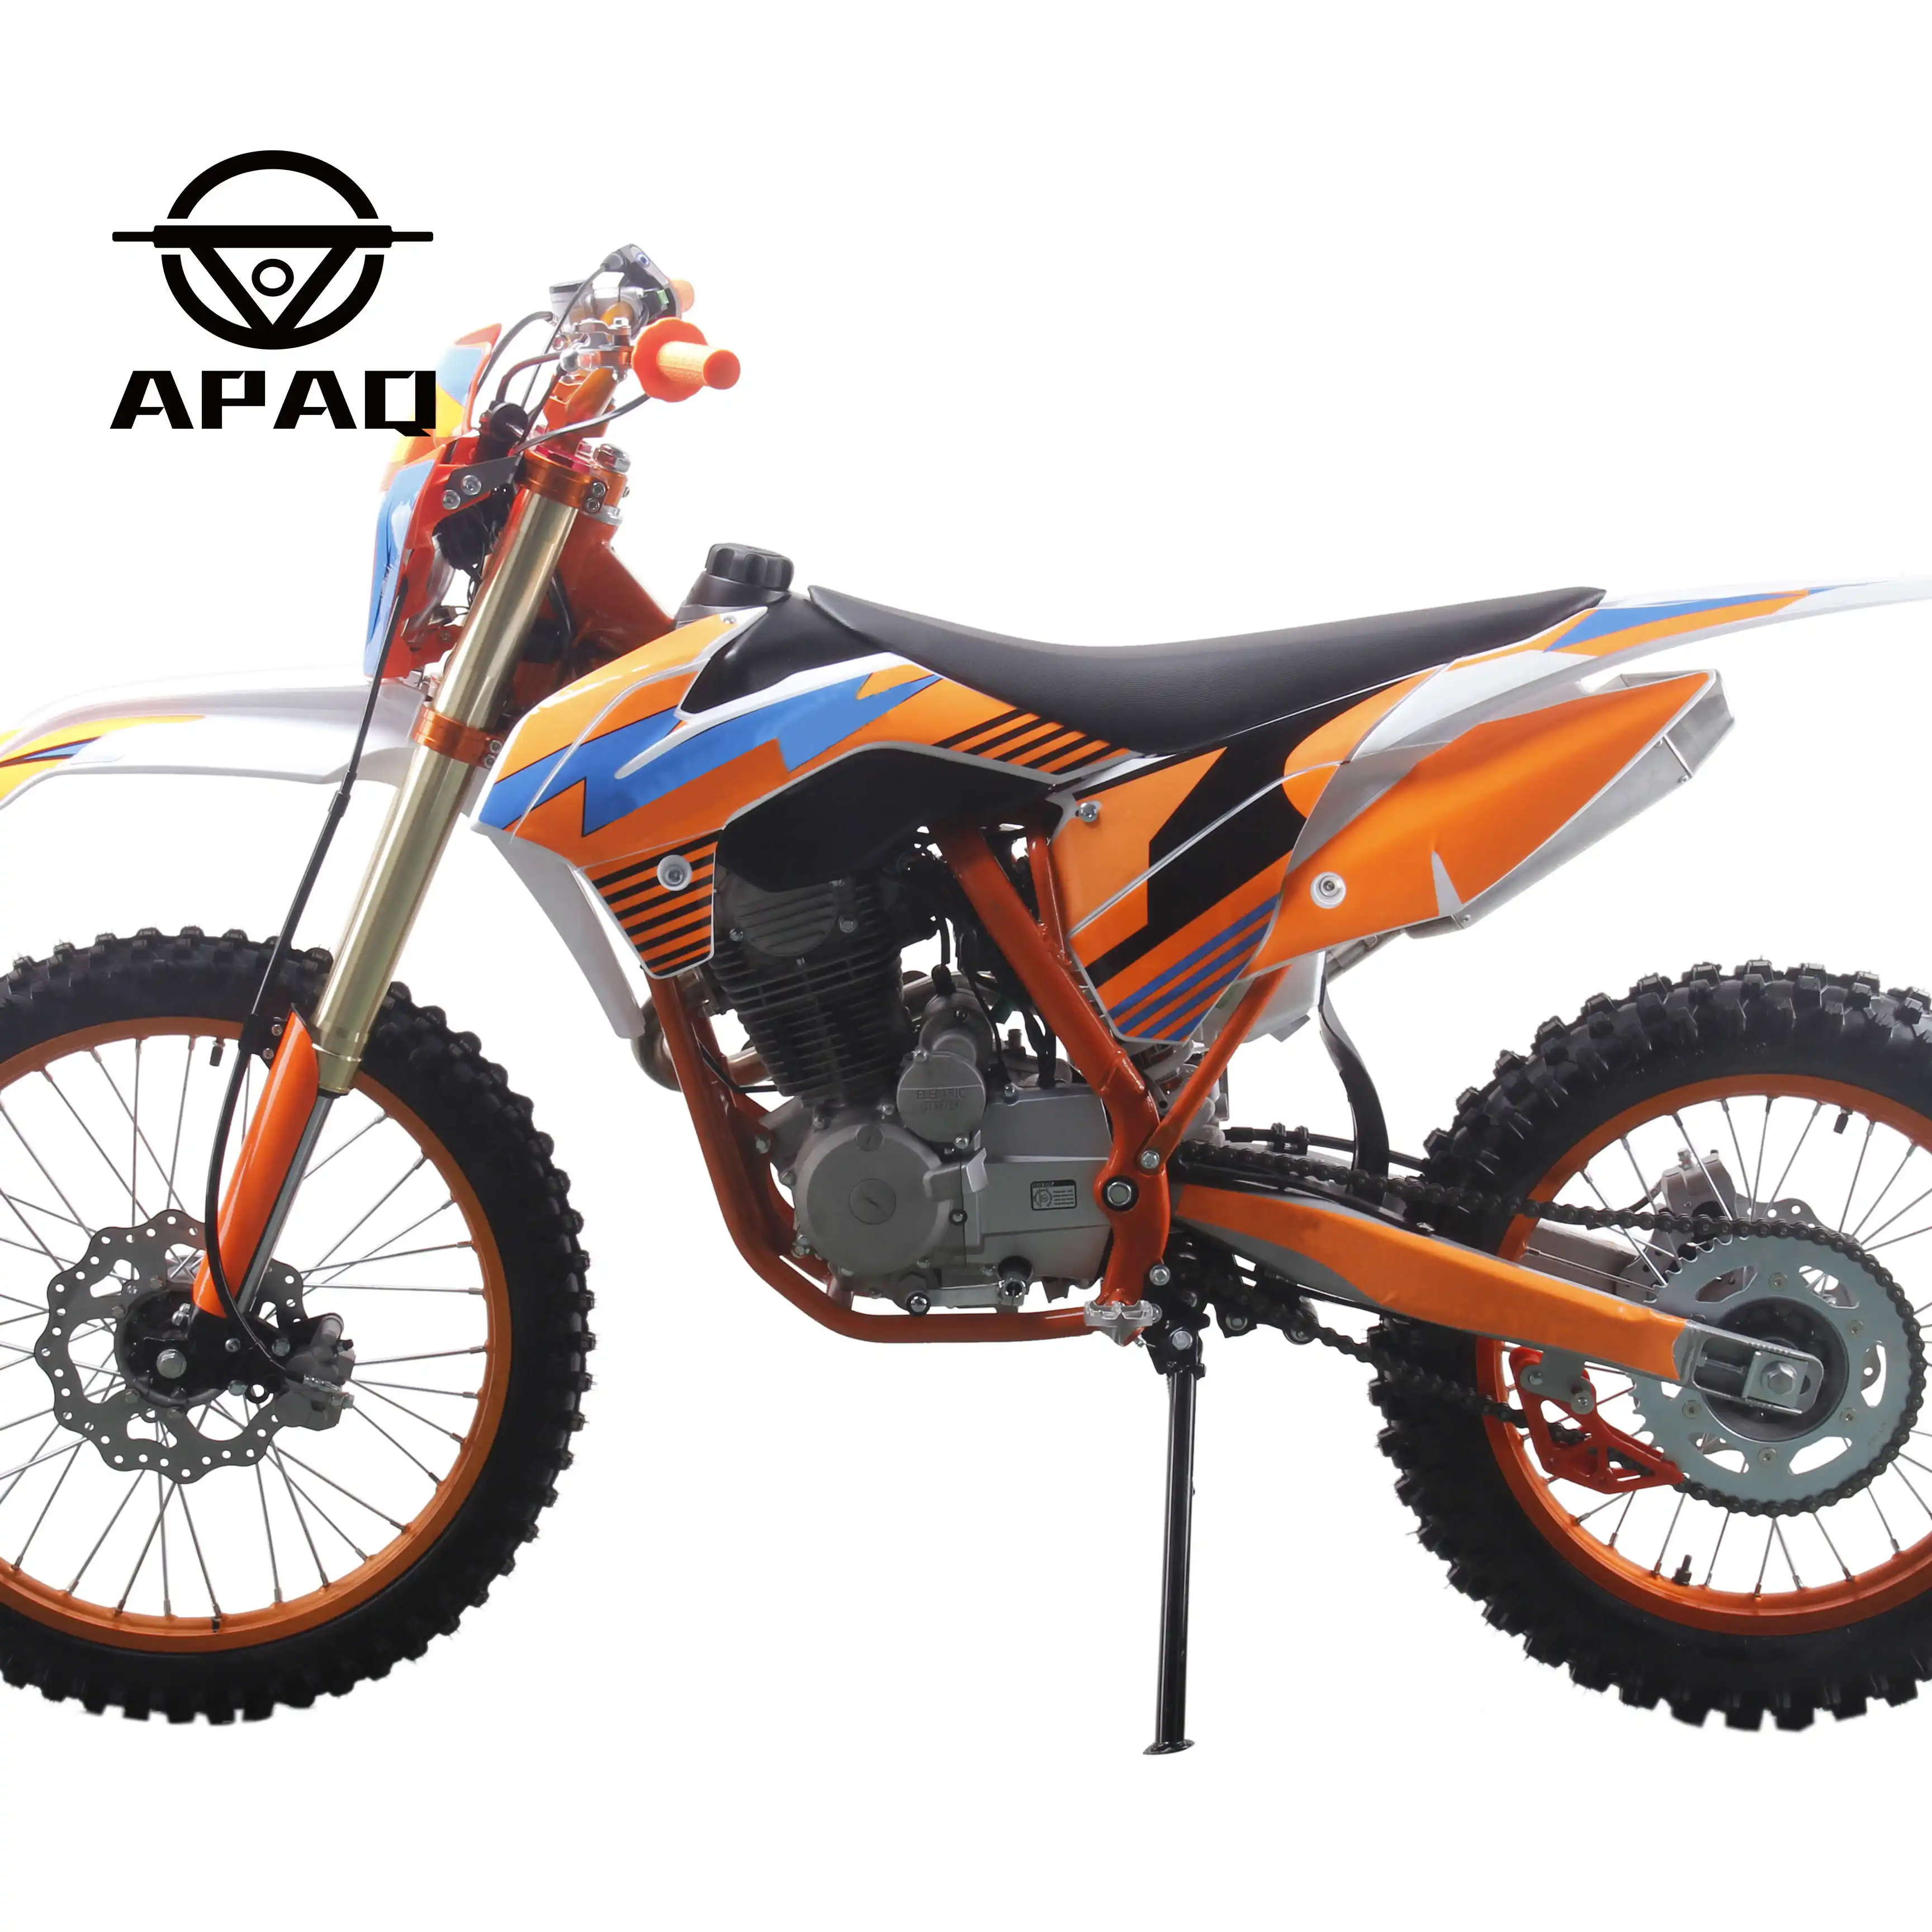 Apaq Ktm Moto Cross Off-Road Motor 2 Takt 300cc Benzine Motor Motor Motocross Dirt Bike